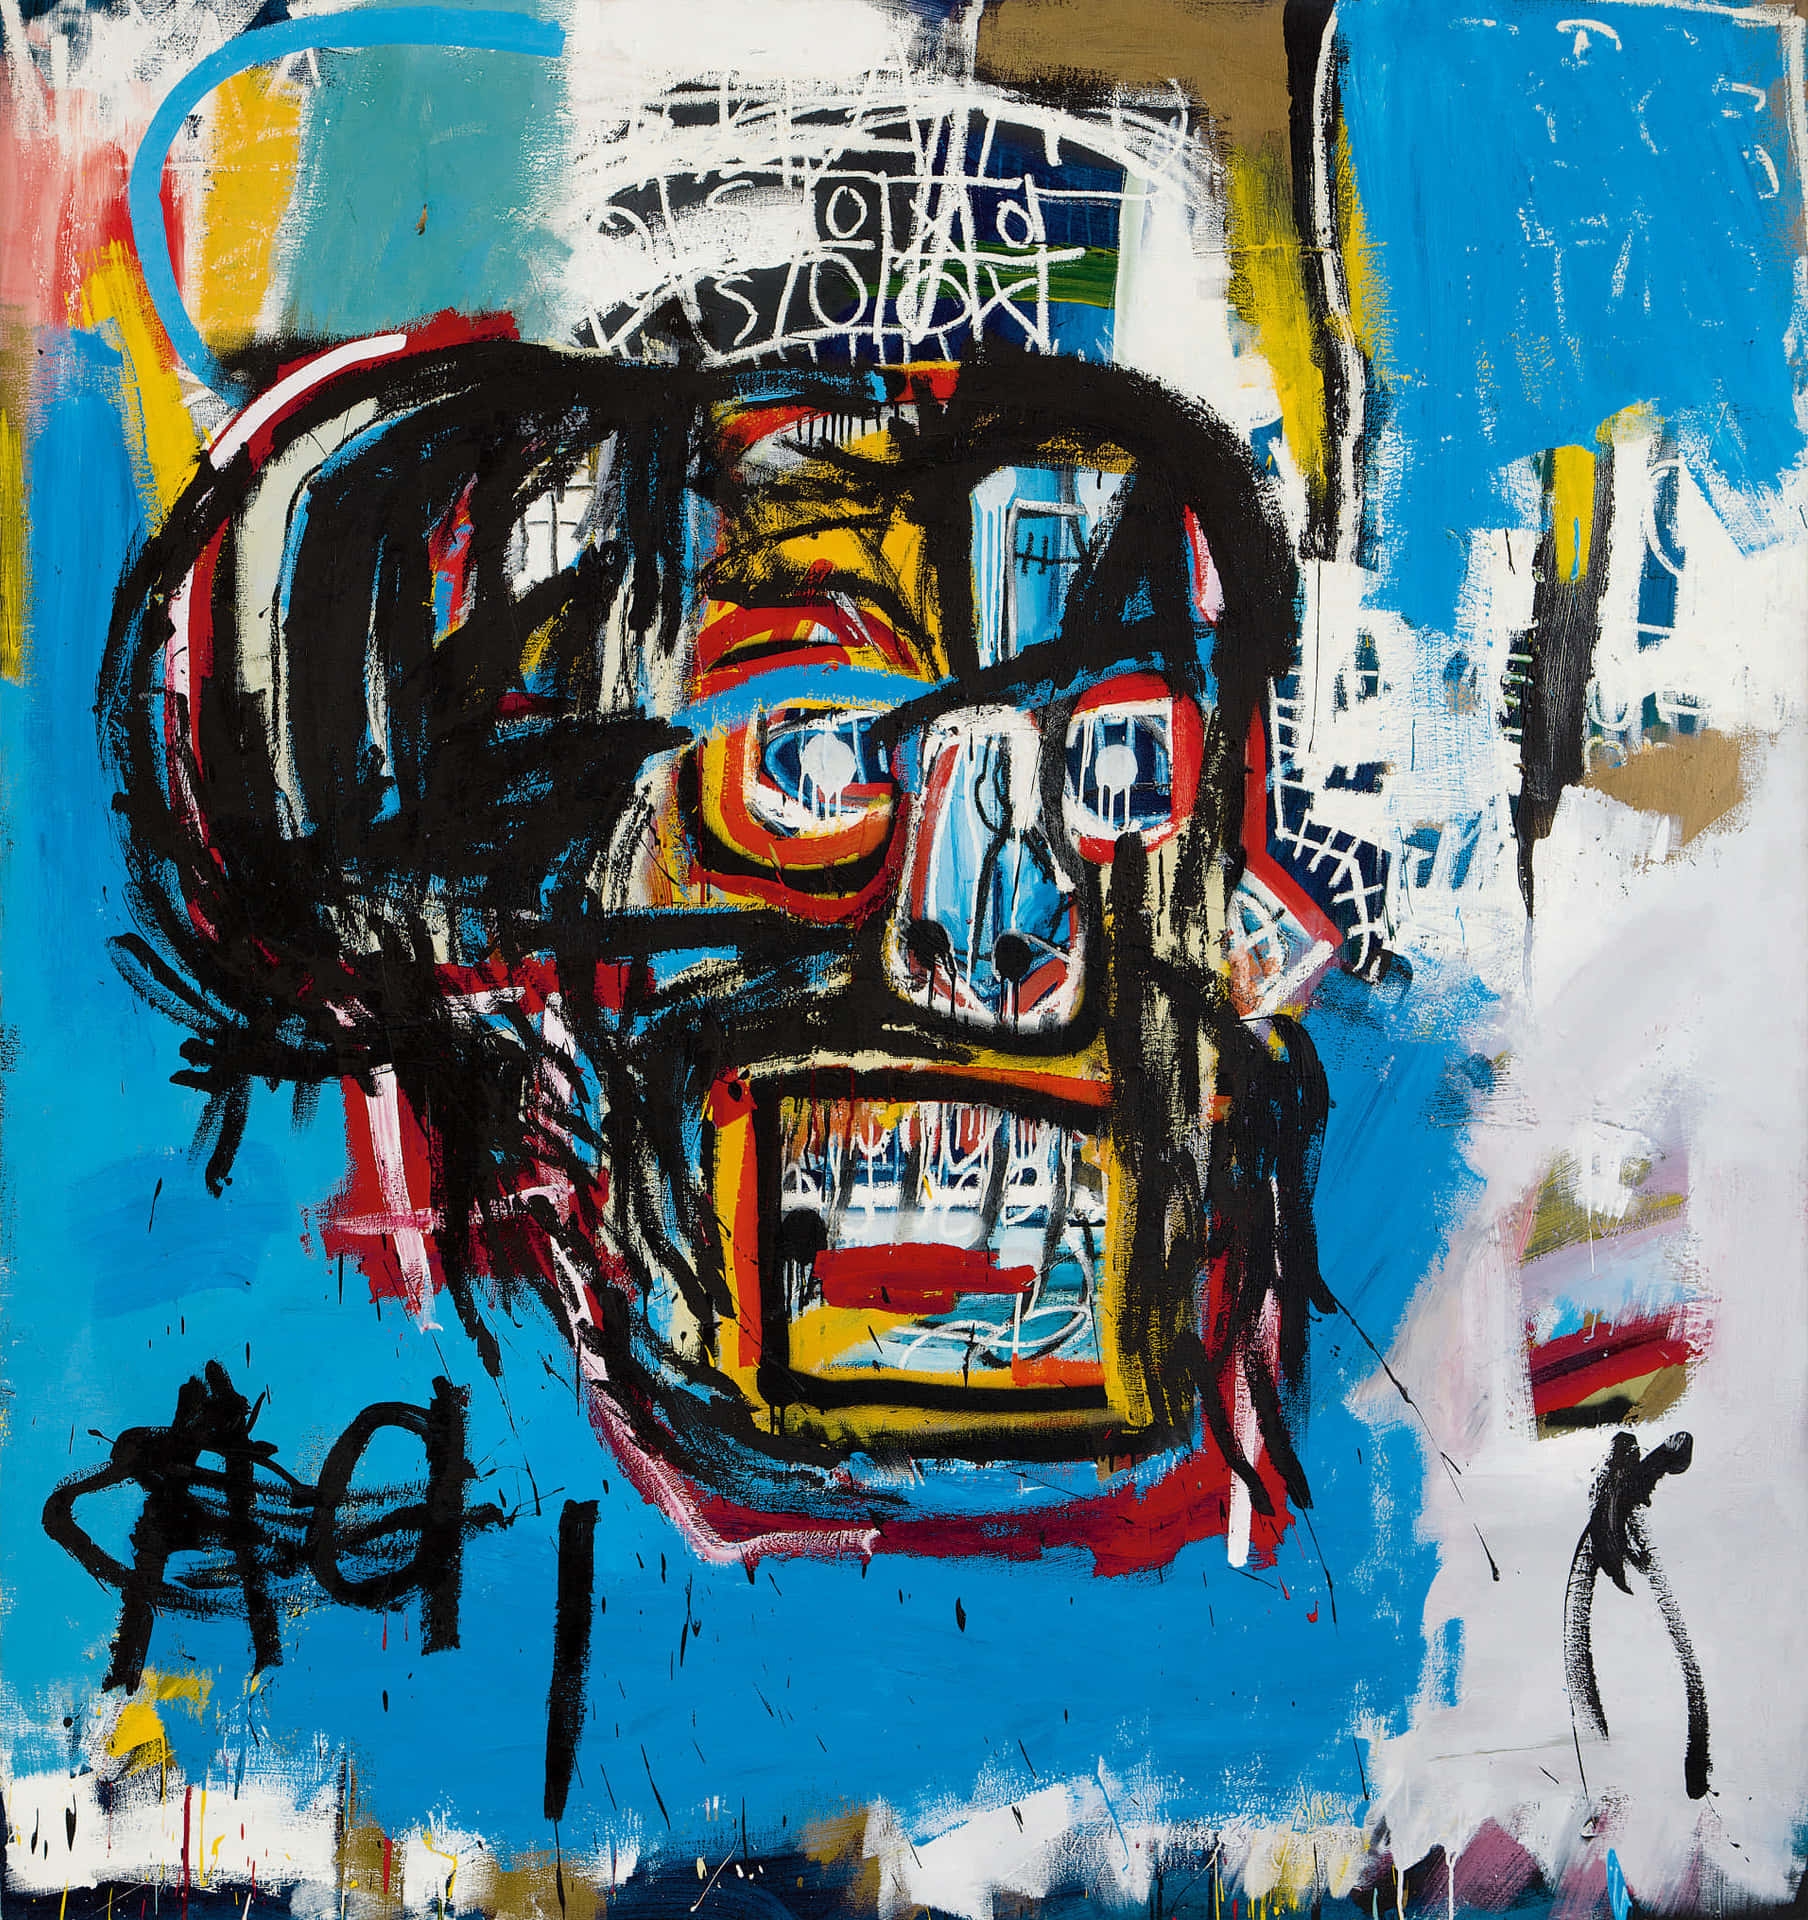 Jean-Michel Basquiat's unique, vibrant artwork Wallpaper